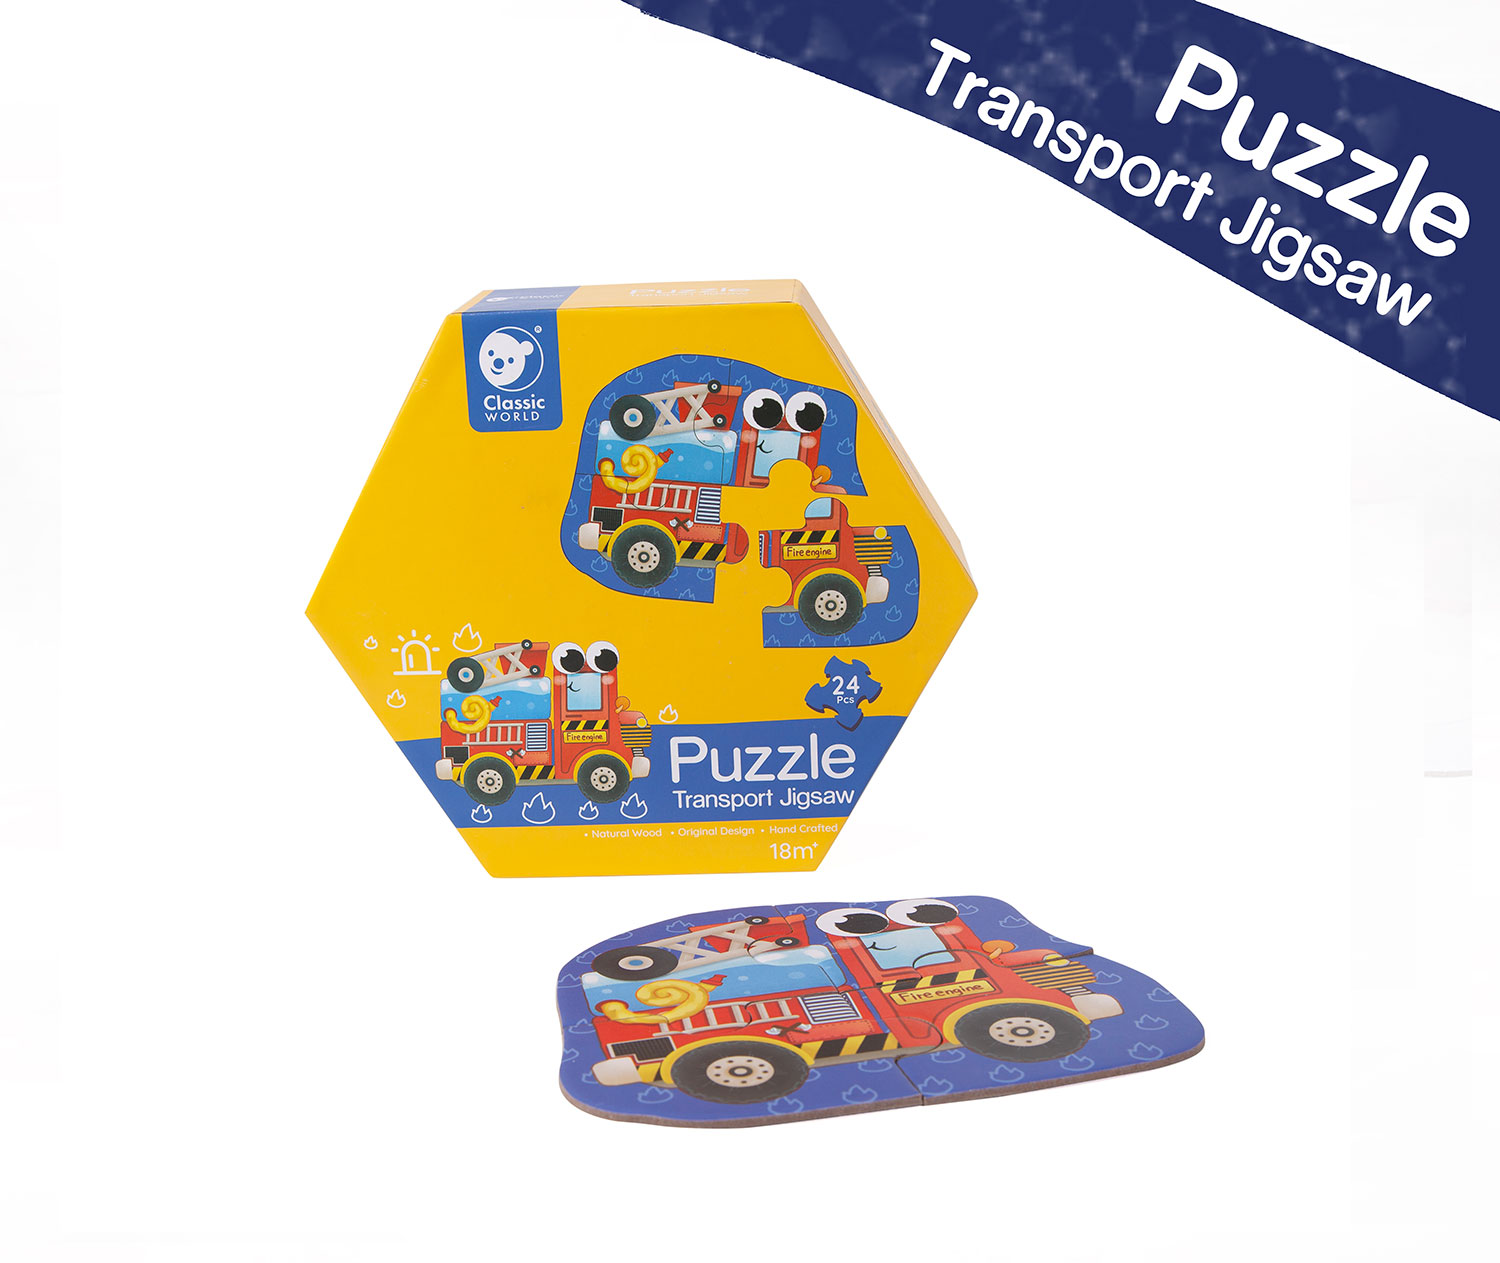 Transport Jigsaw Puzzle